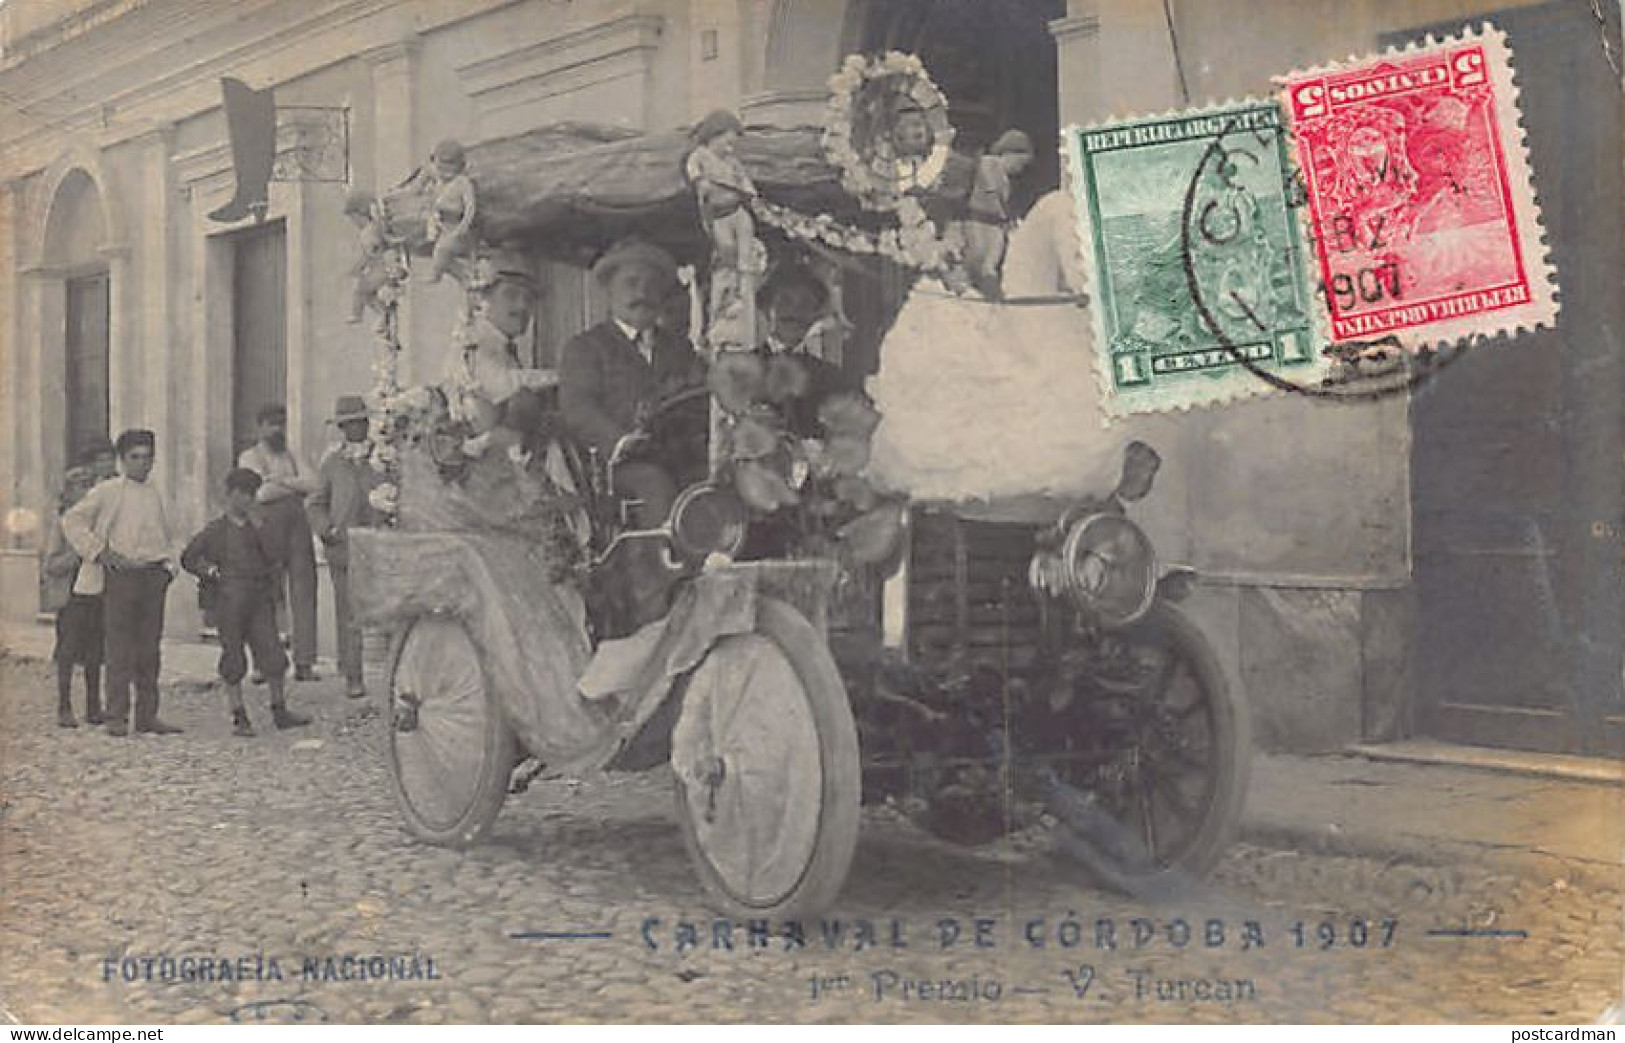 Argentina - CORDOBA - Carnaval 1907, Primer Premio - Fotografia Nacional - REAL PHOTO. - Argentina